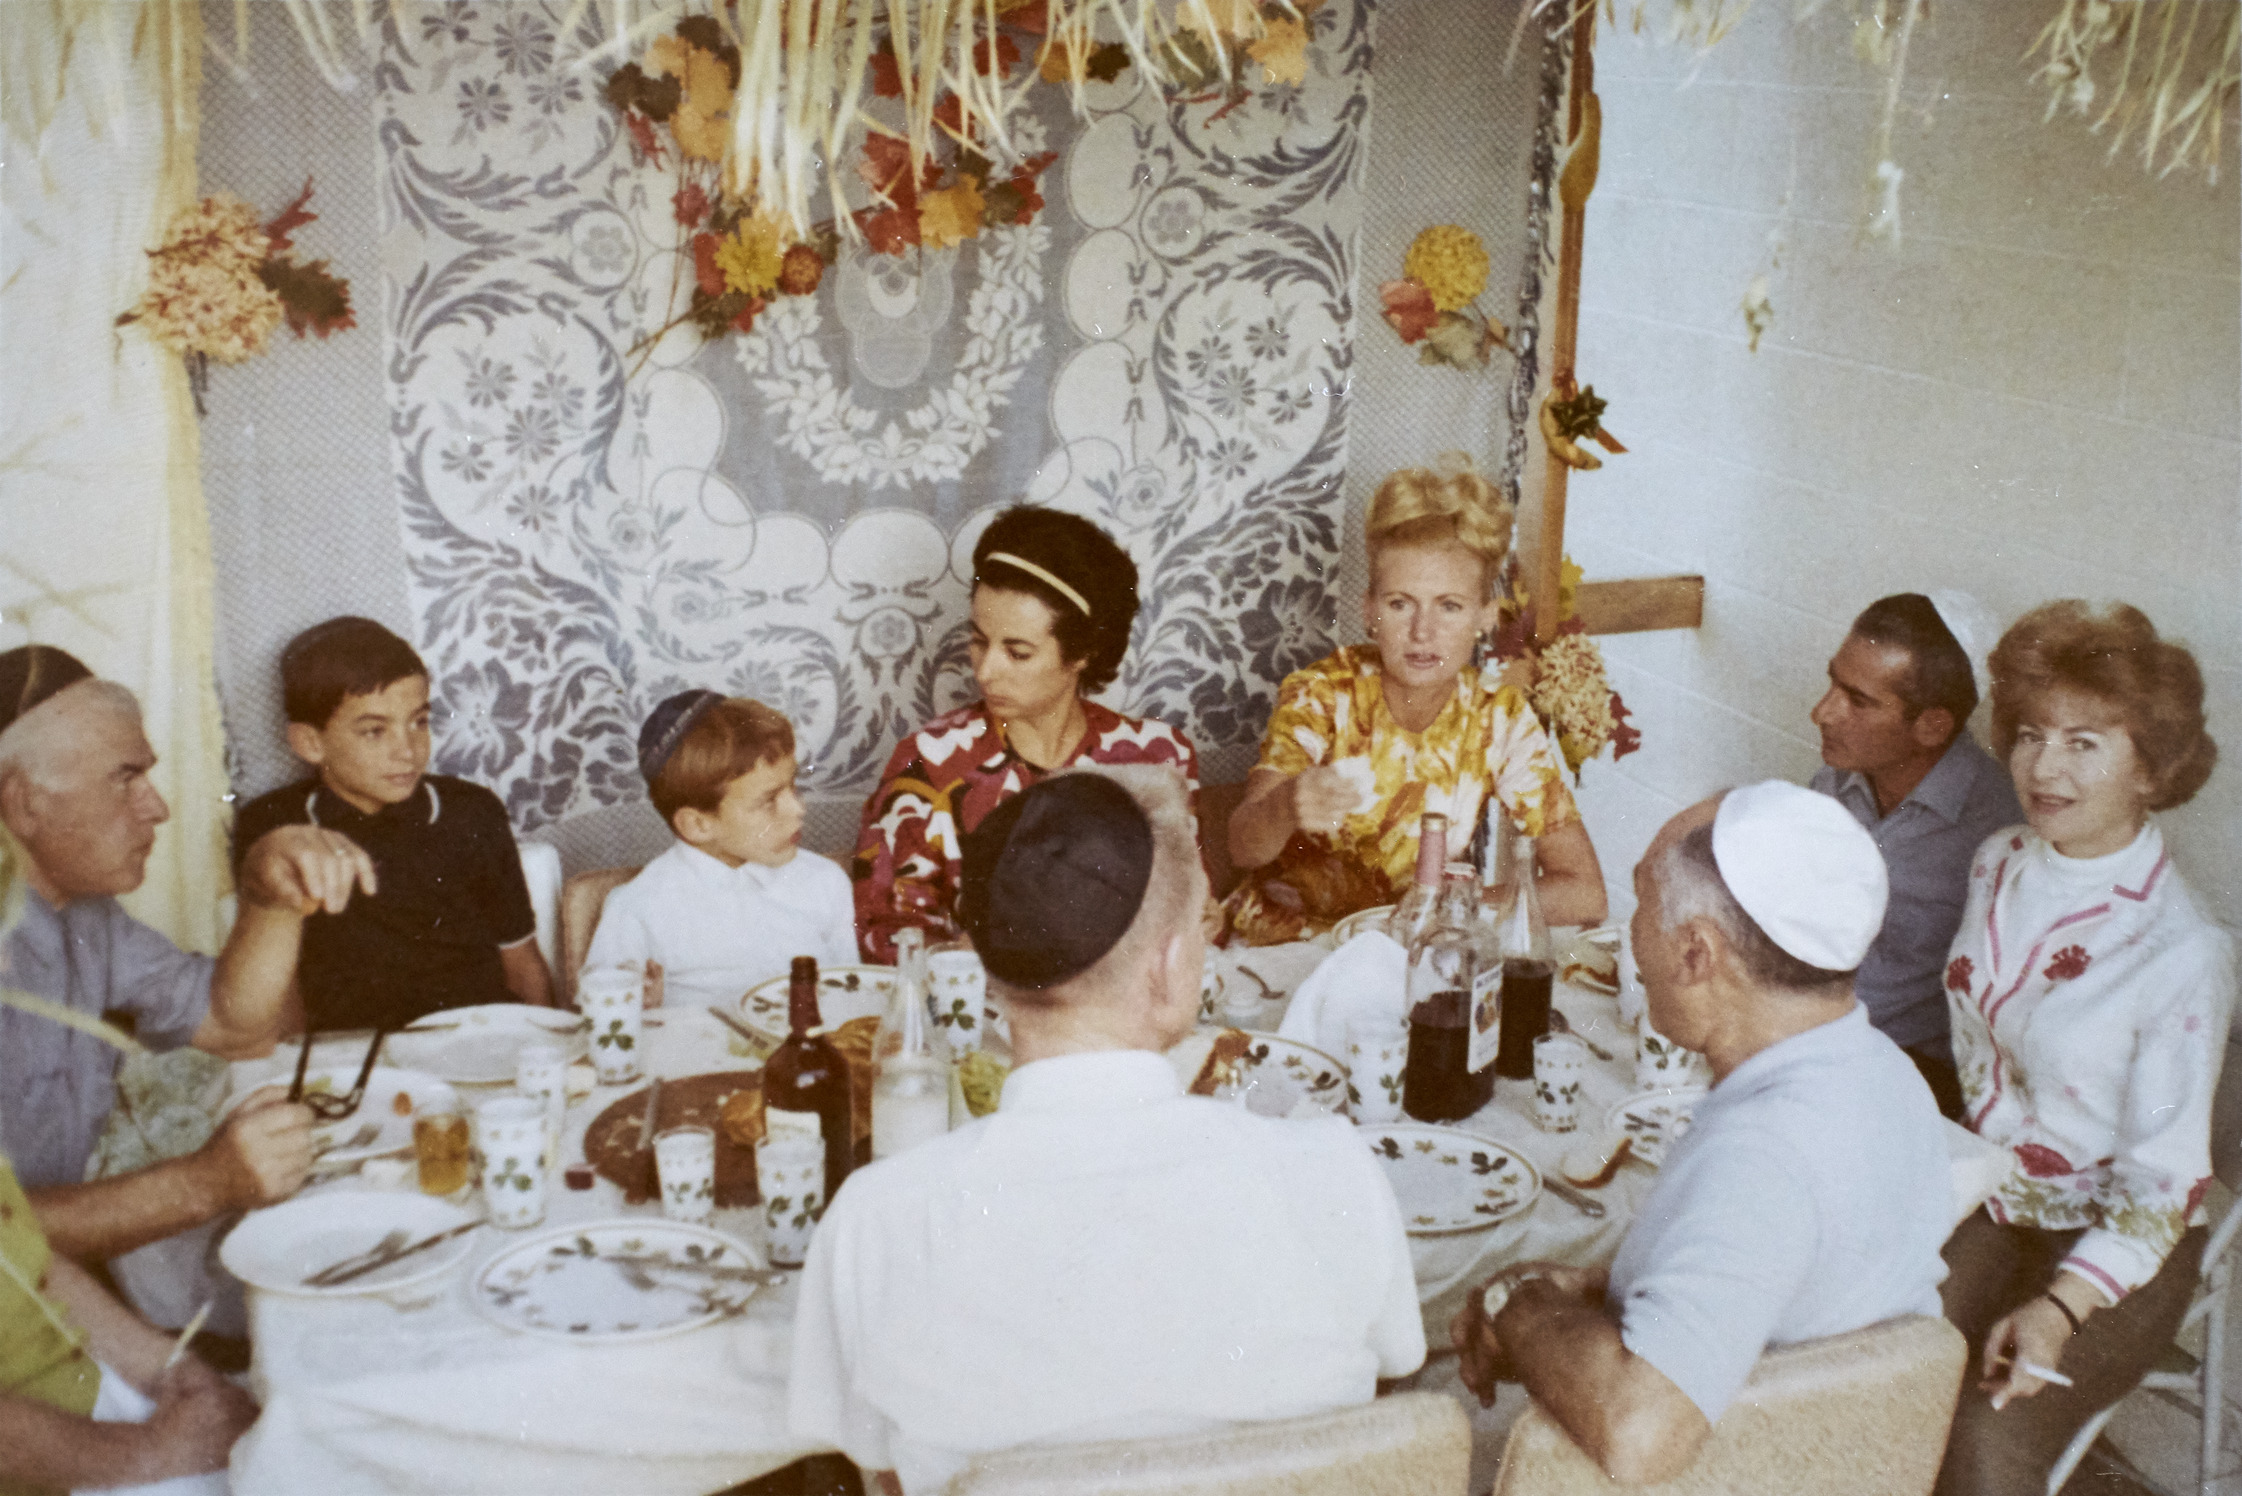 Photograph of Succot (Sukkot) celebration, 1968